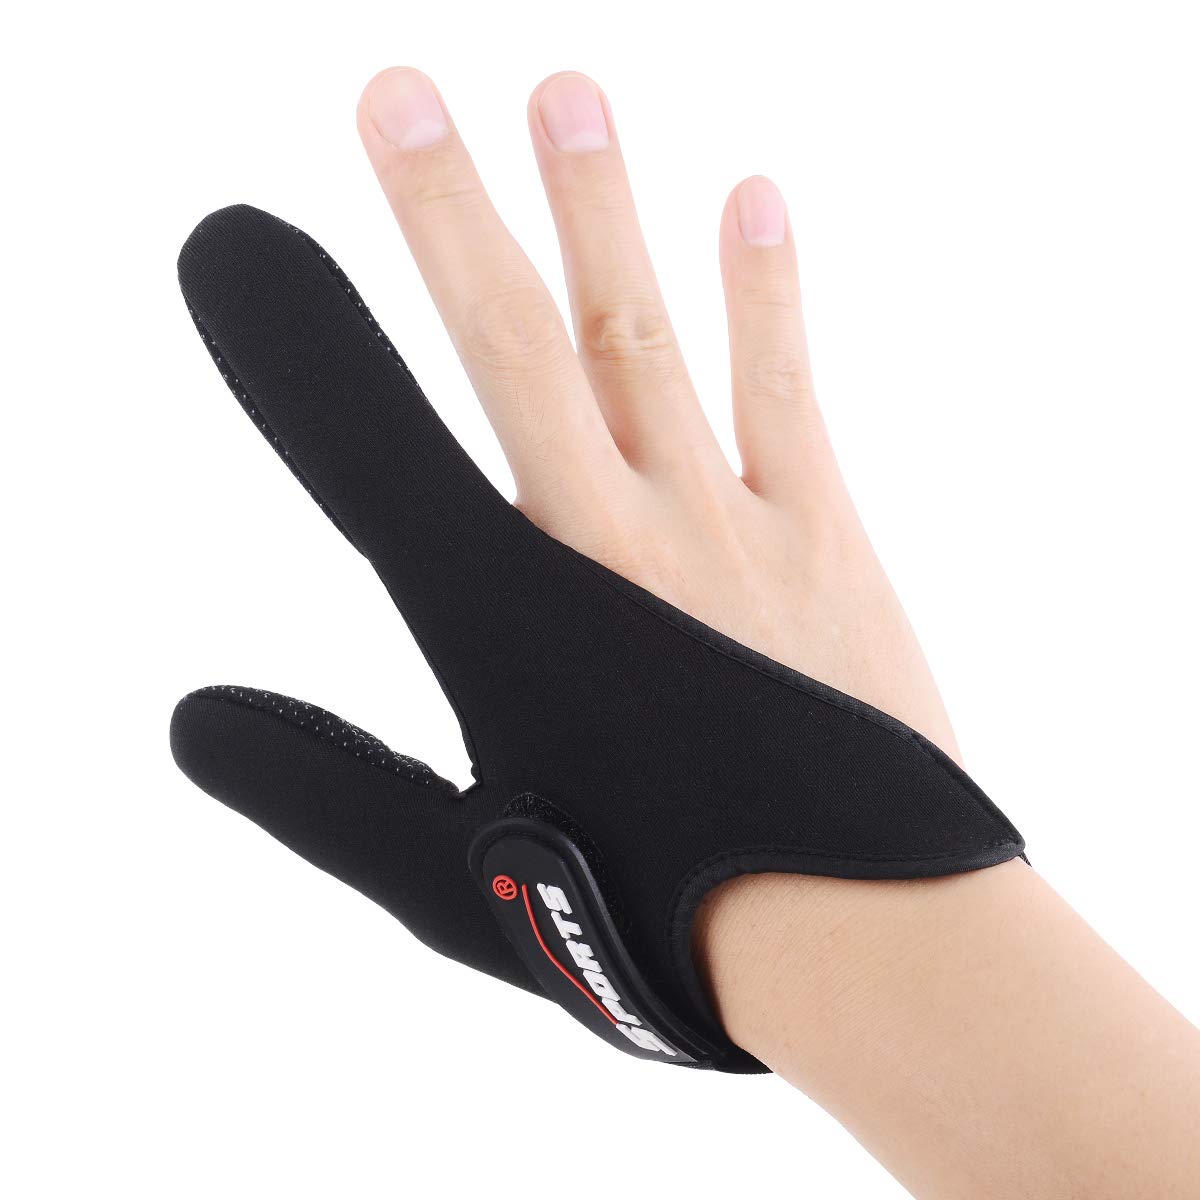 Geruwam Fishing Finger Protector - Elastic Unisex Gloves for